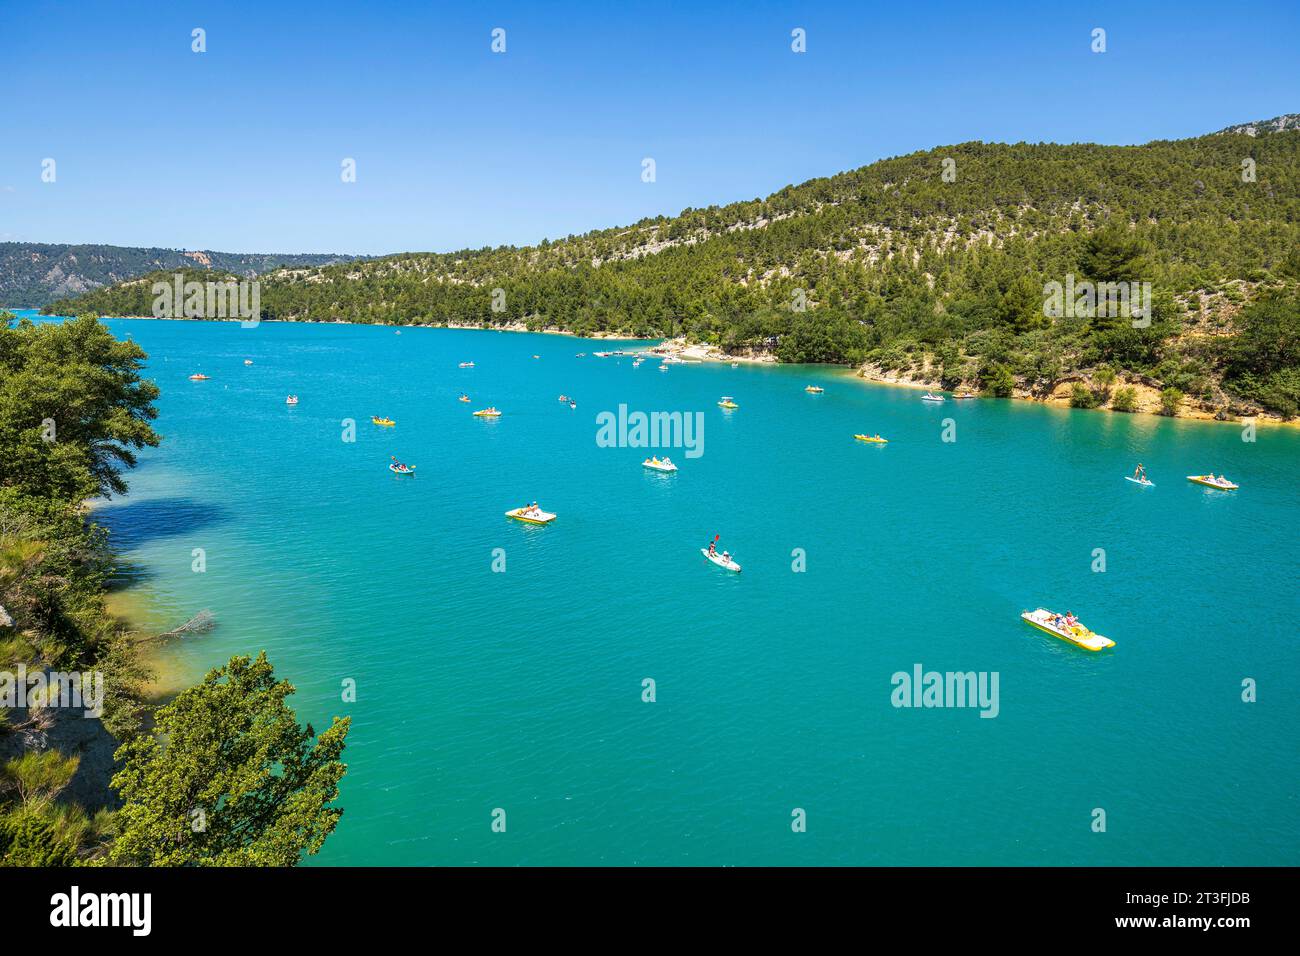 Francia, Alpes-de-Haute-Provence, parco naturale regionale del Verdon, lago di Sainte-Croix visto dal ponte alla foce delle Gorges du Verdon Foto Stock